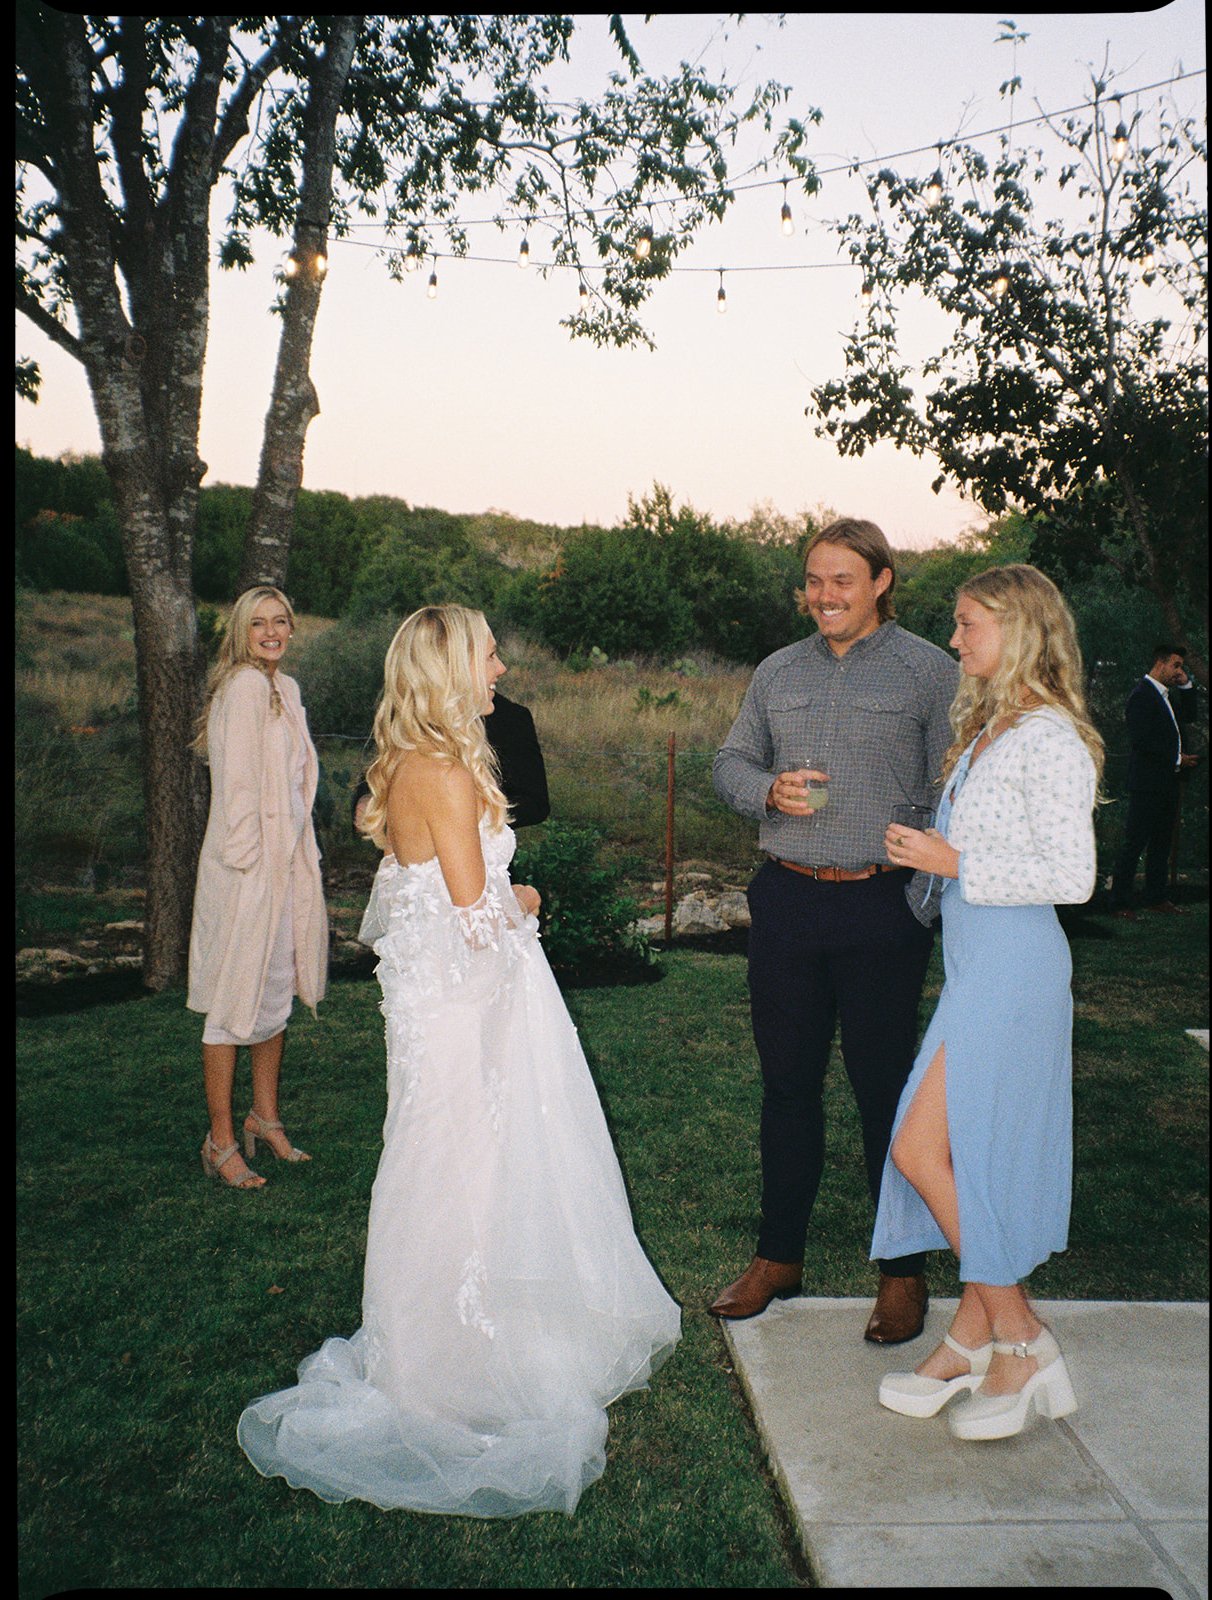 Best-Austin-Wedding-Photographers-Elopement-Film-35mm-Asheville-Santa-Barbara-Backyard-141.jpg